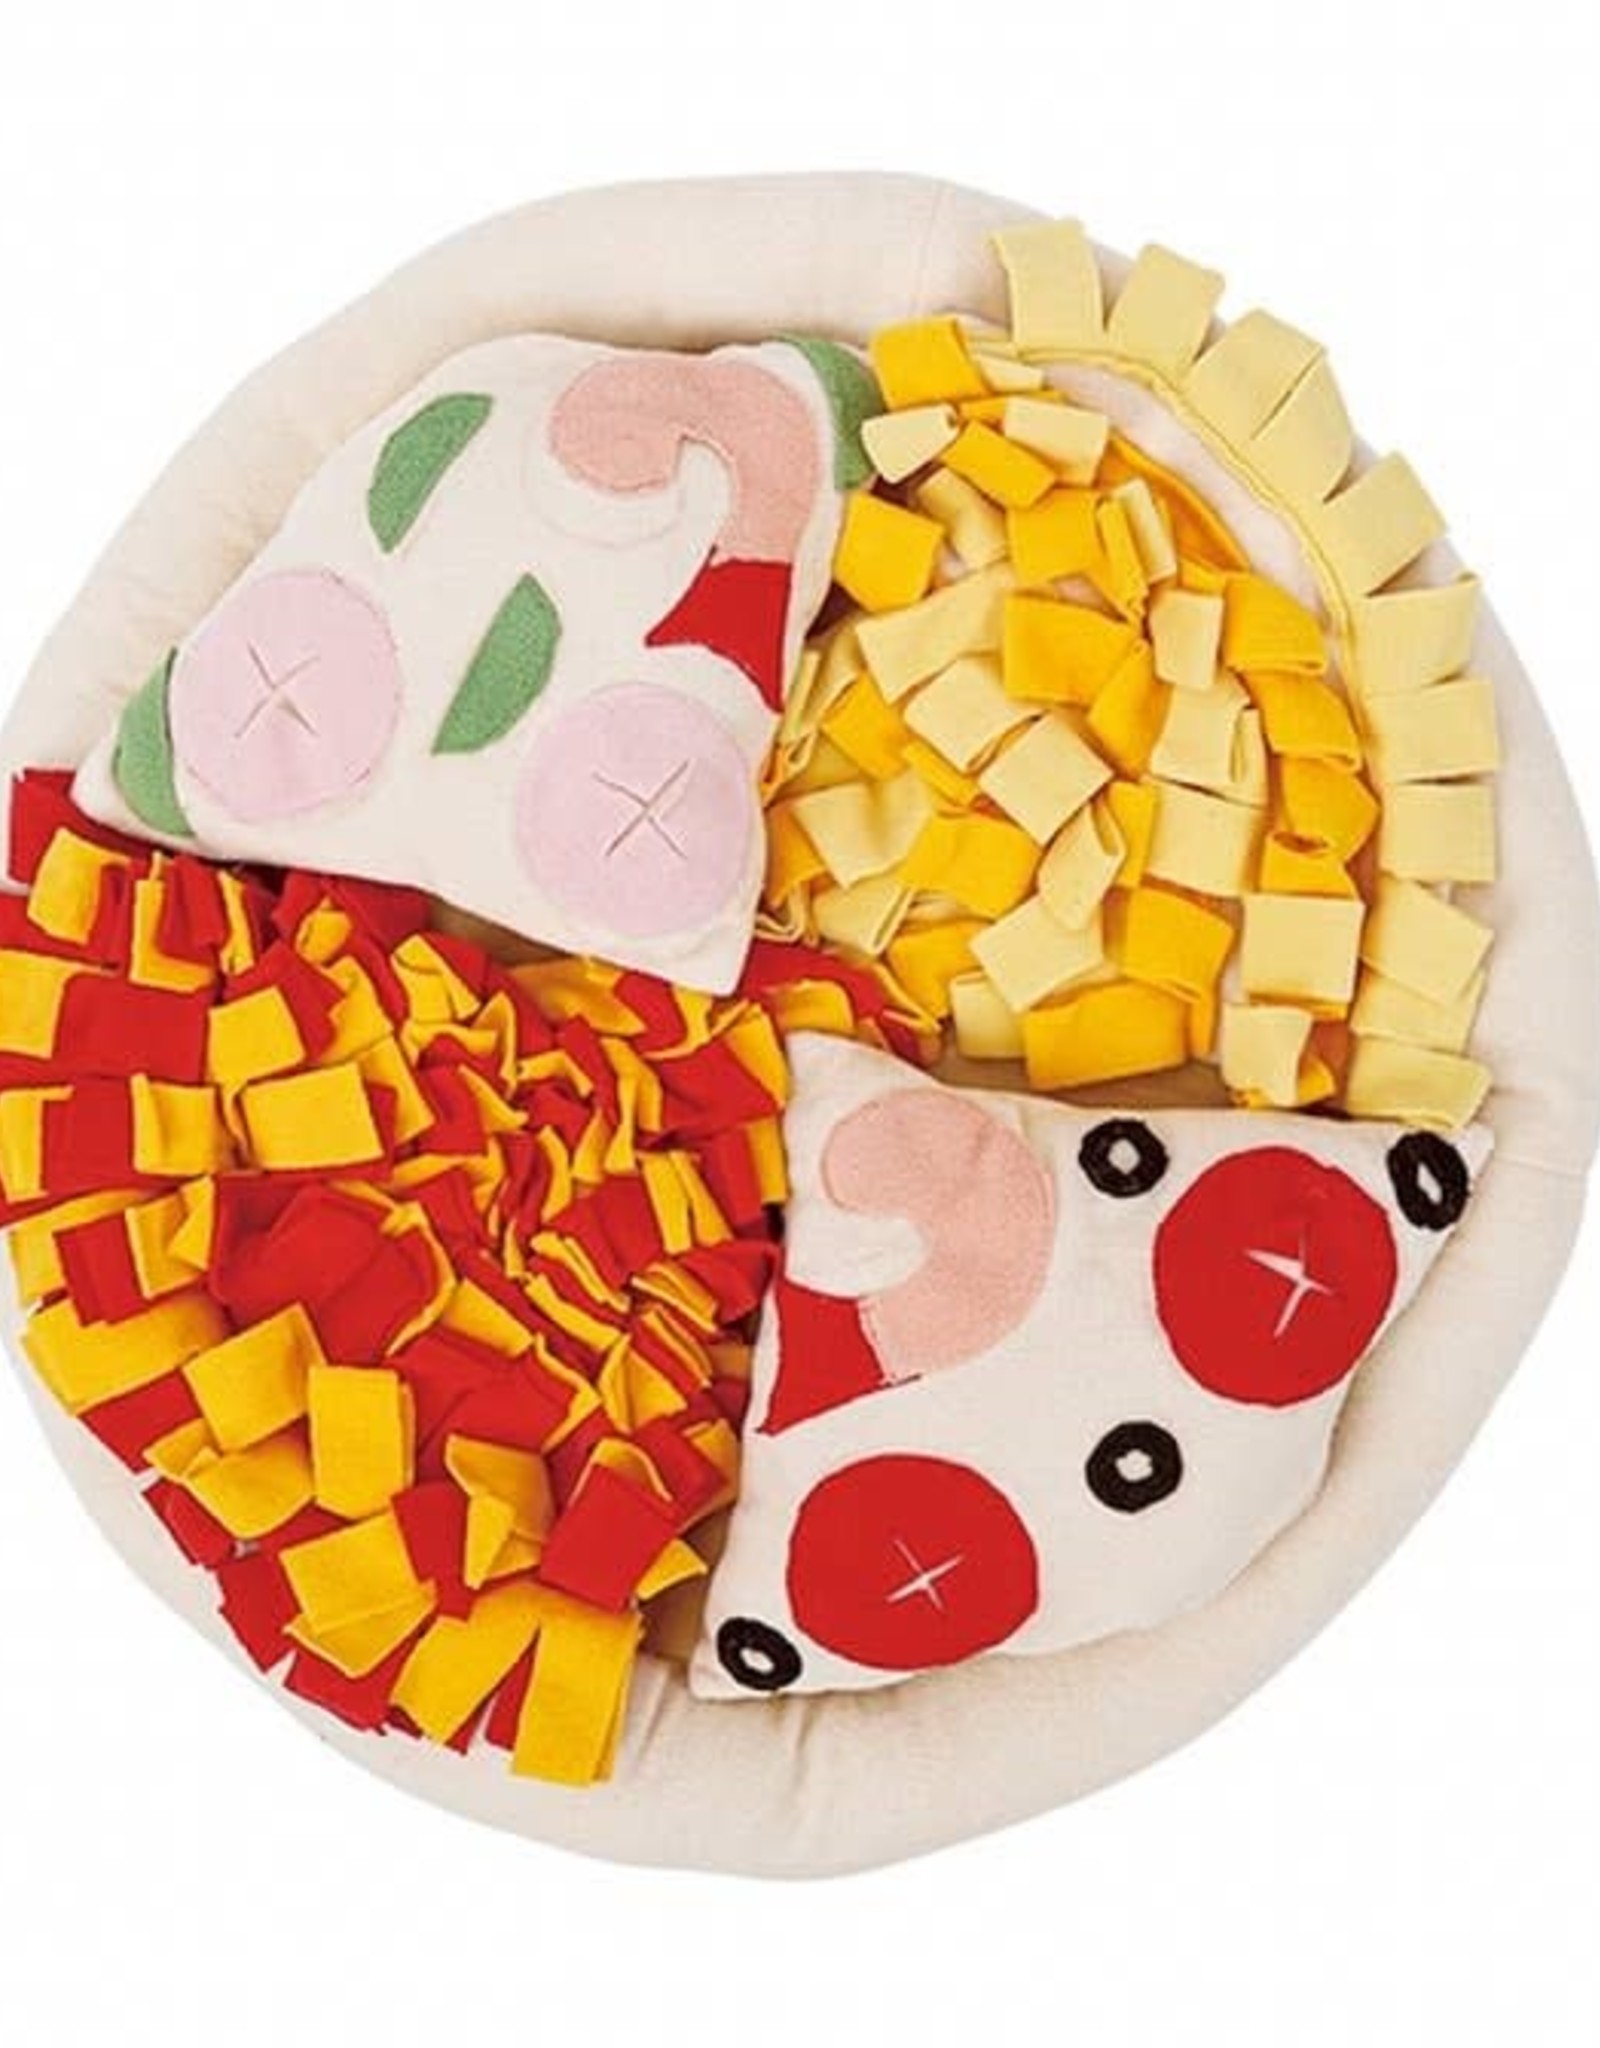 Pizza Snuffle Toy - Molly's Healthy Pet Food Market